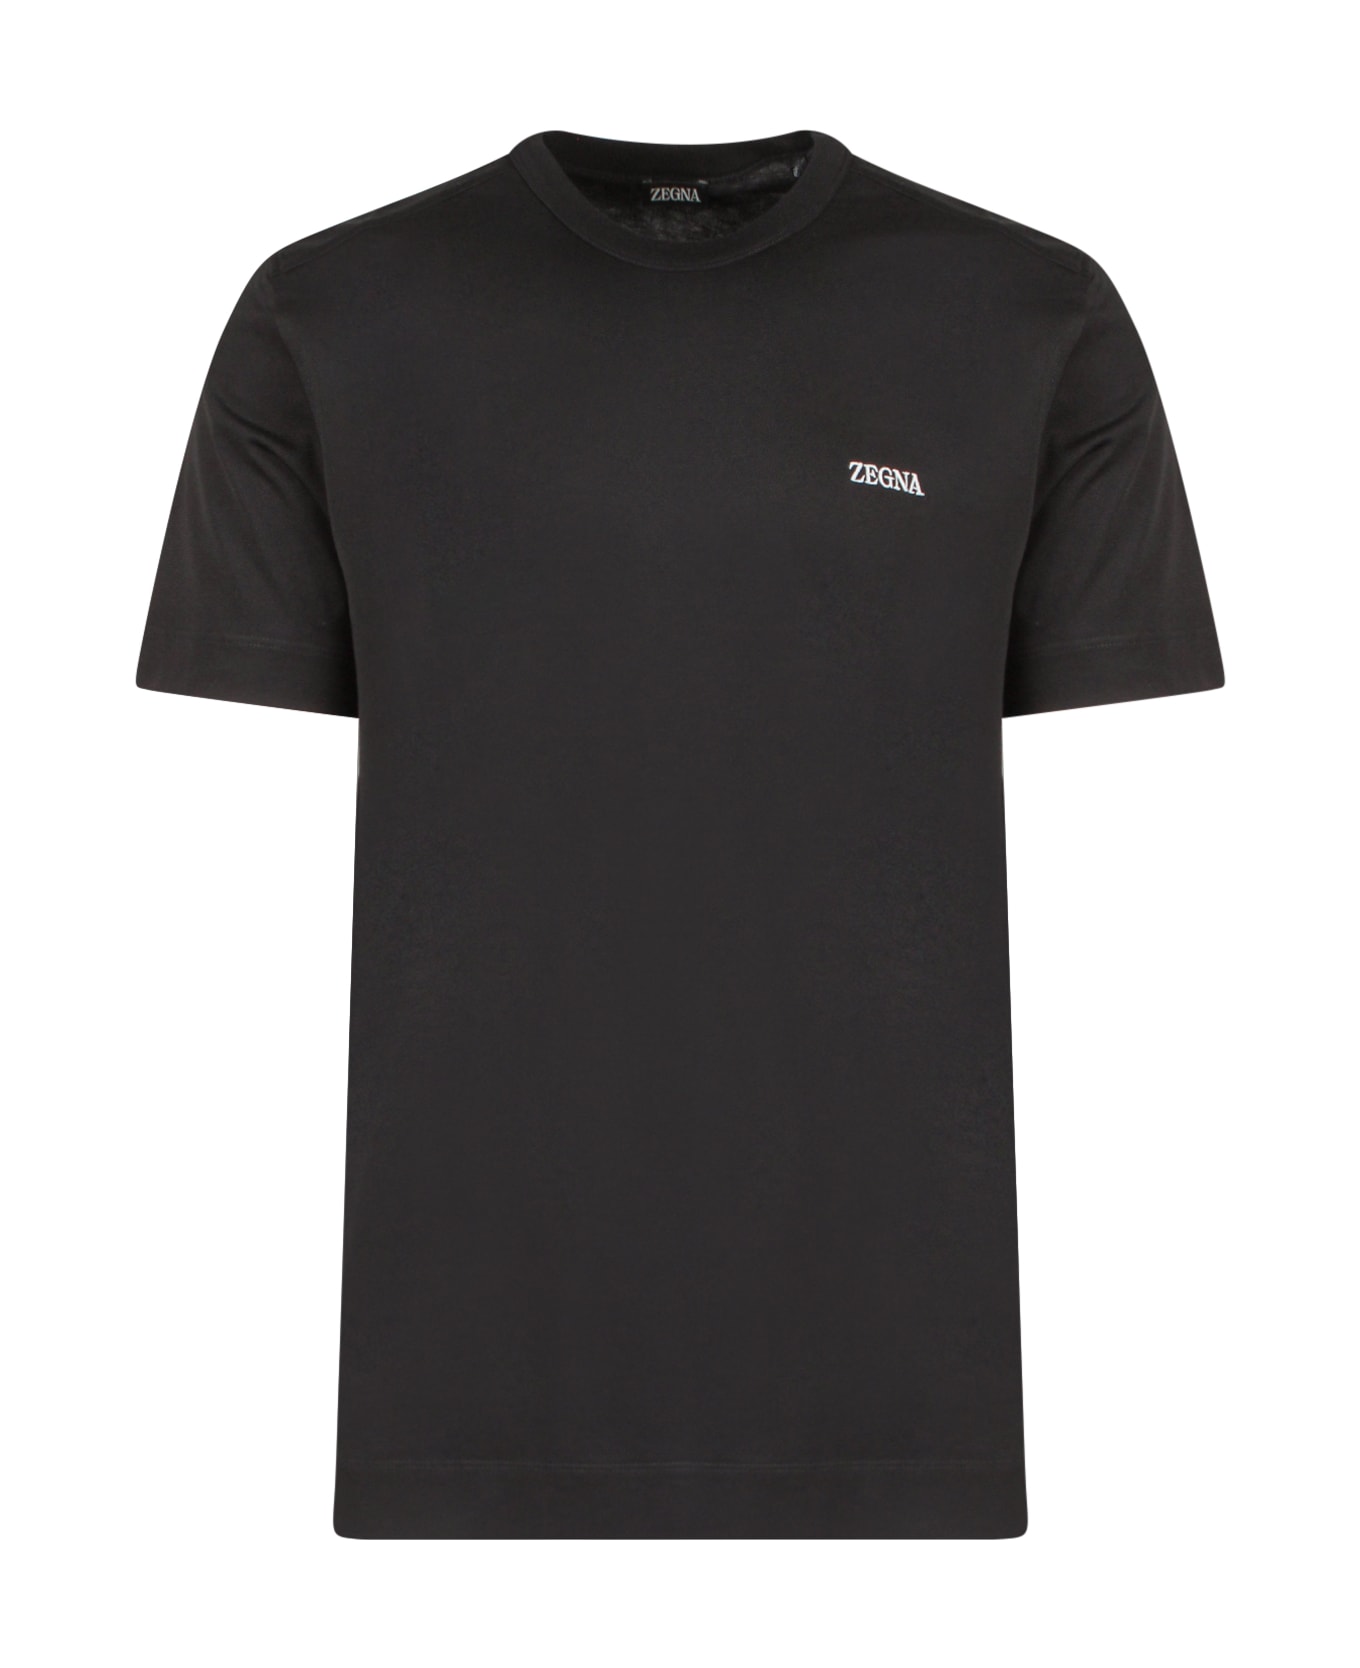 Zegna T-shirt - Black シャツ